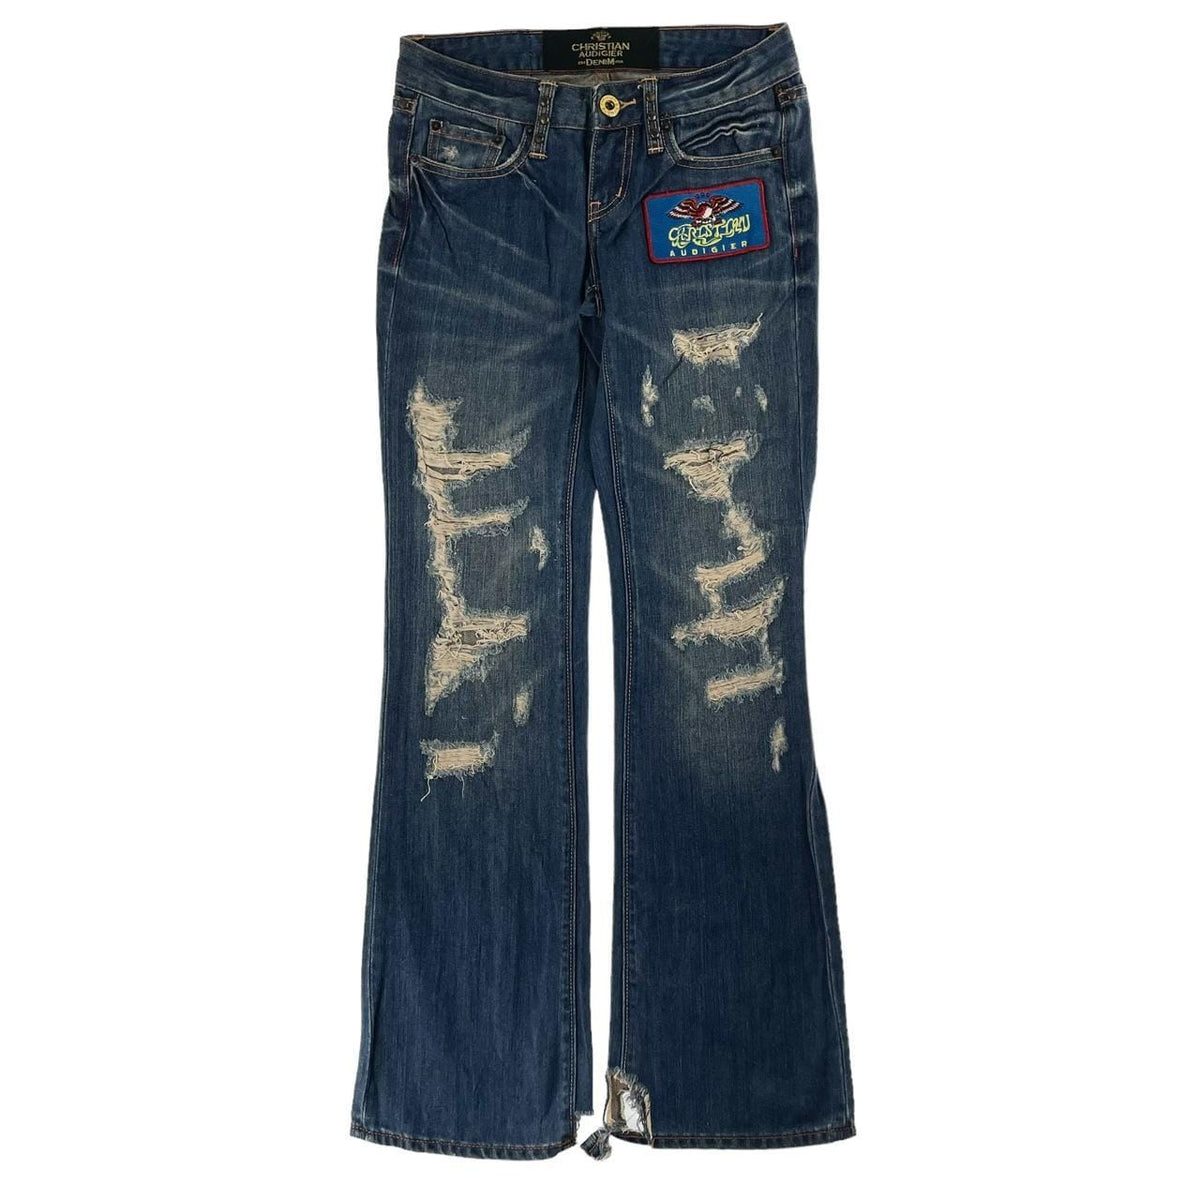 Vintage Christian Audigier denim jeans trousers W29